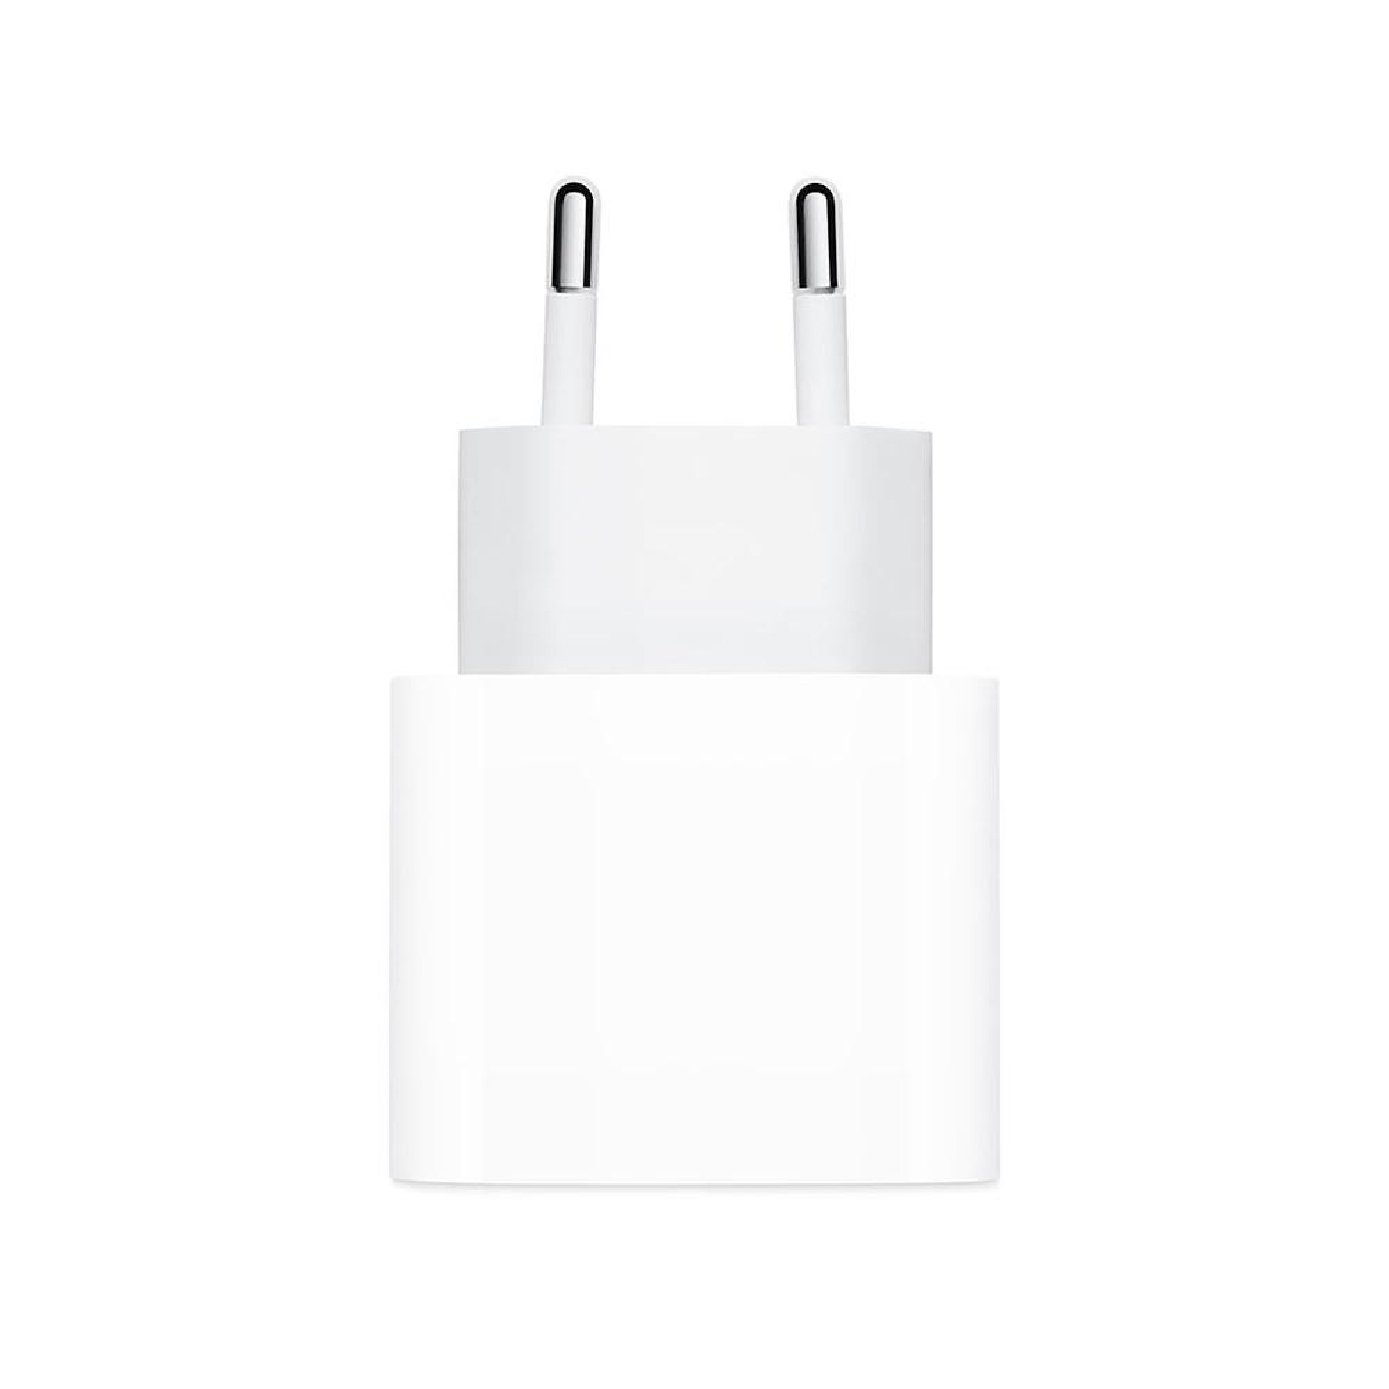 Apple Original charger 20W USB 